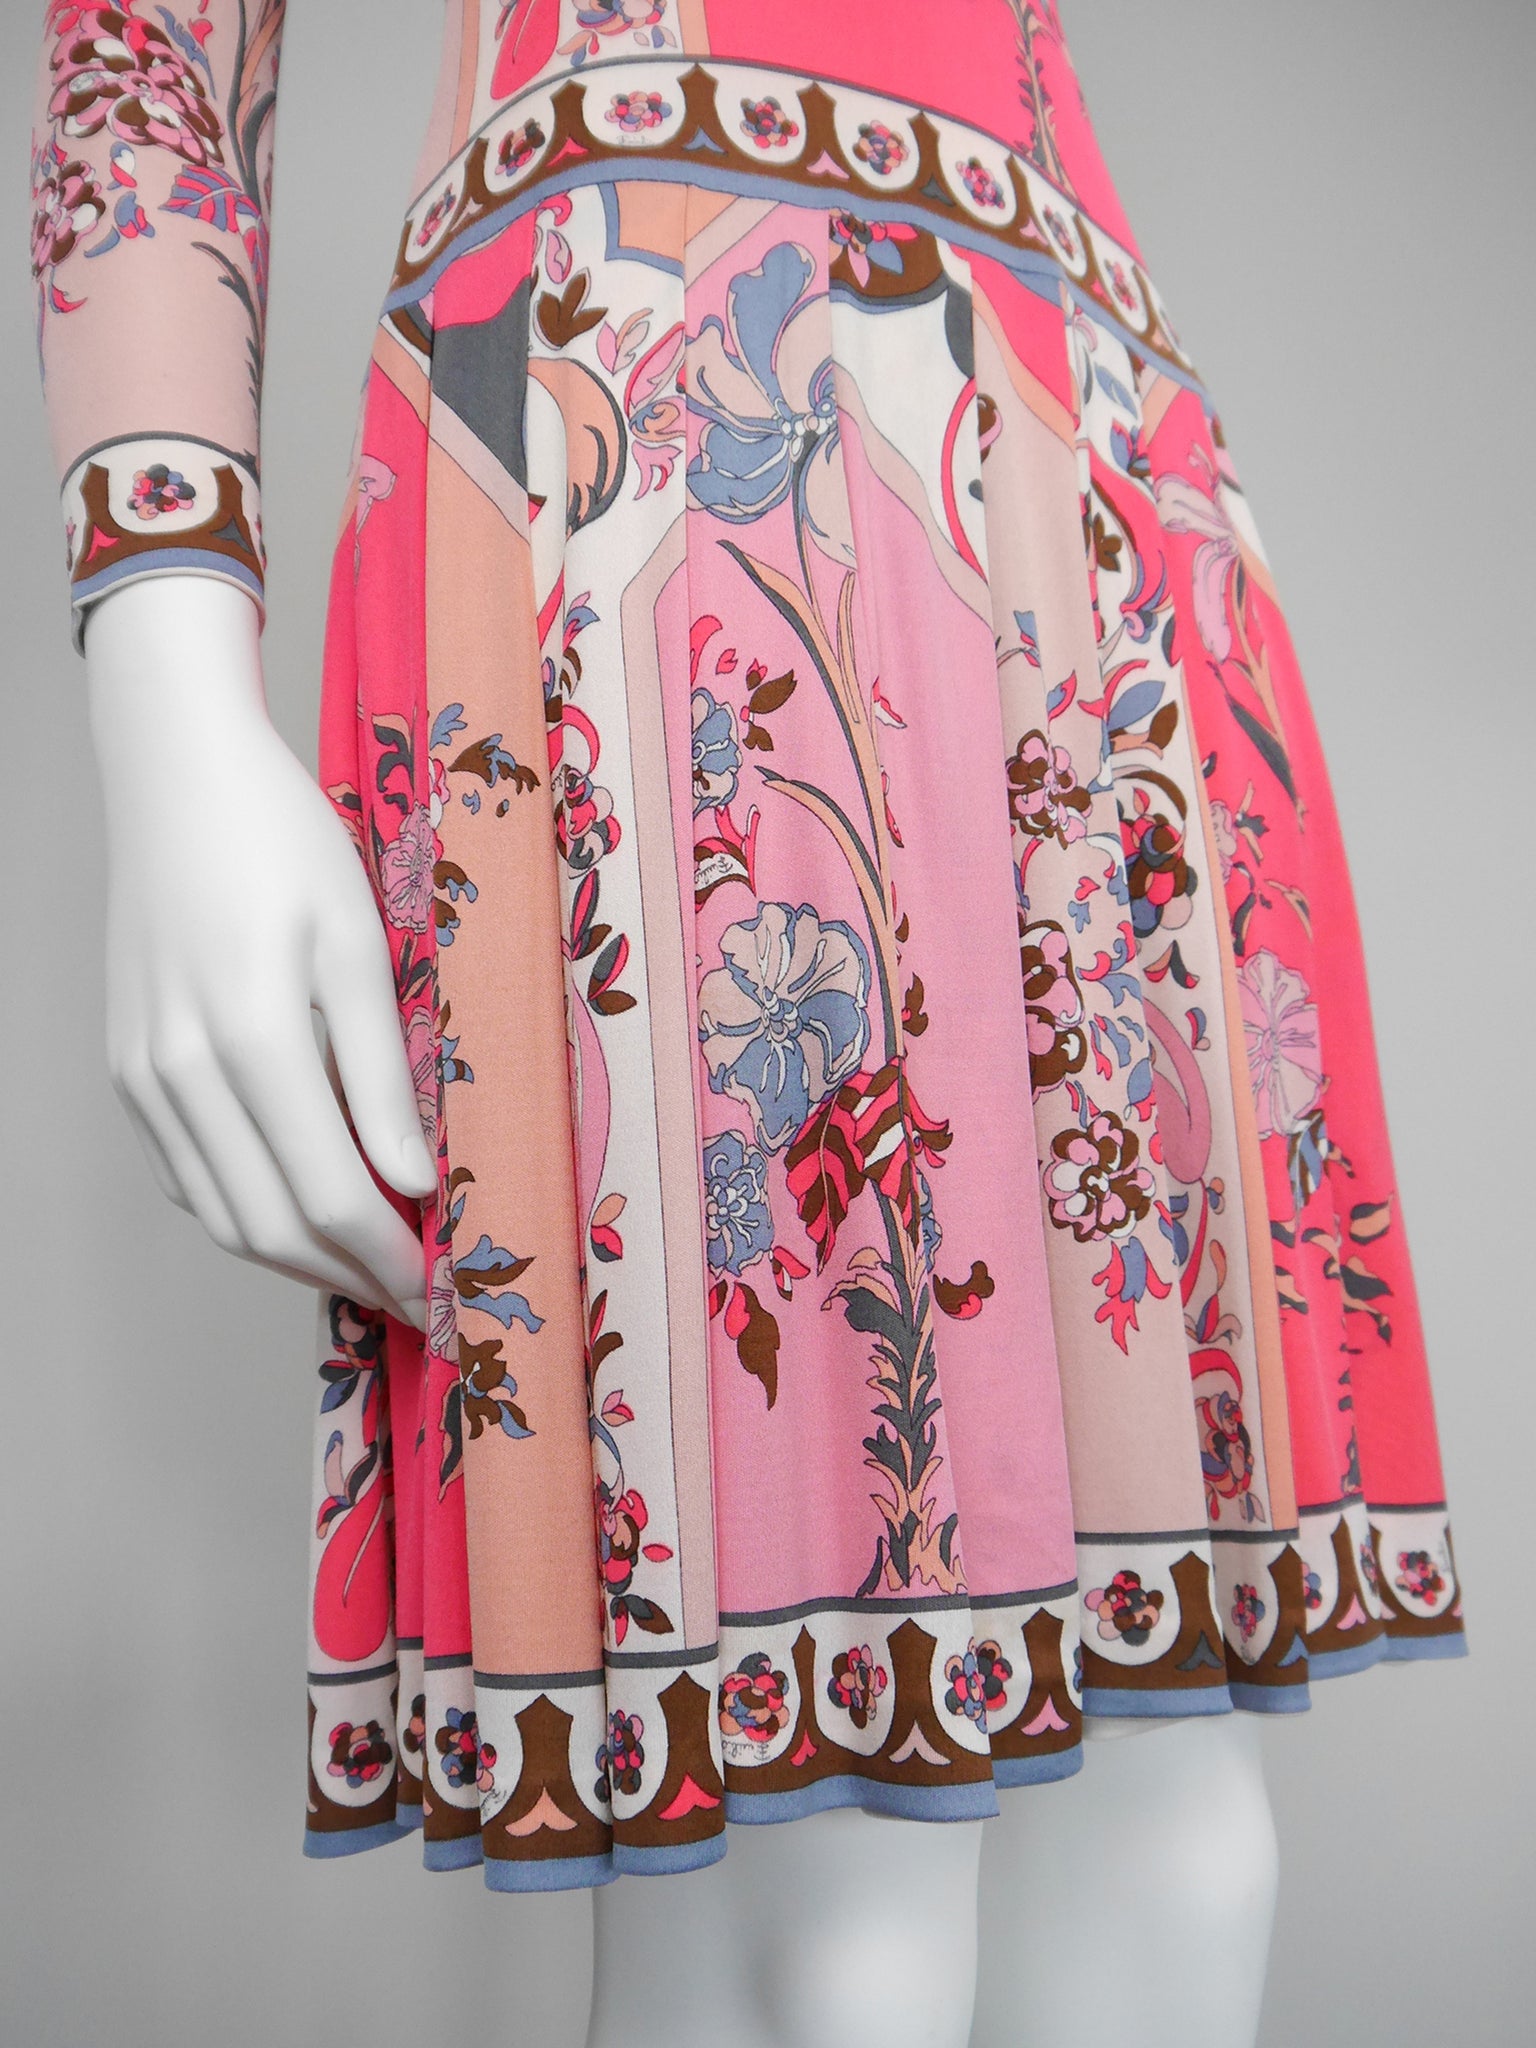 Emilio Pucci 1960s Patterned Silk Dress